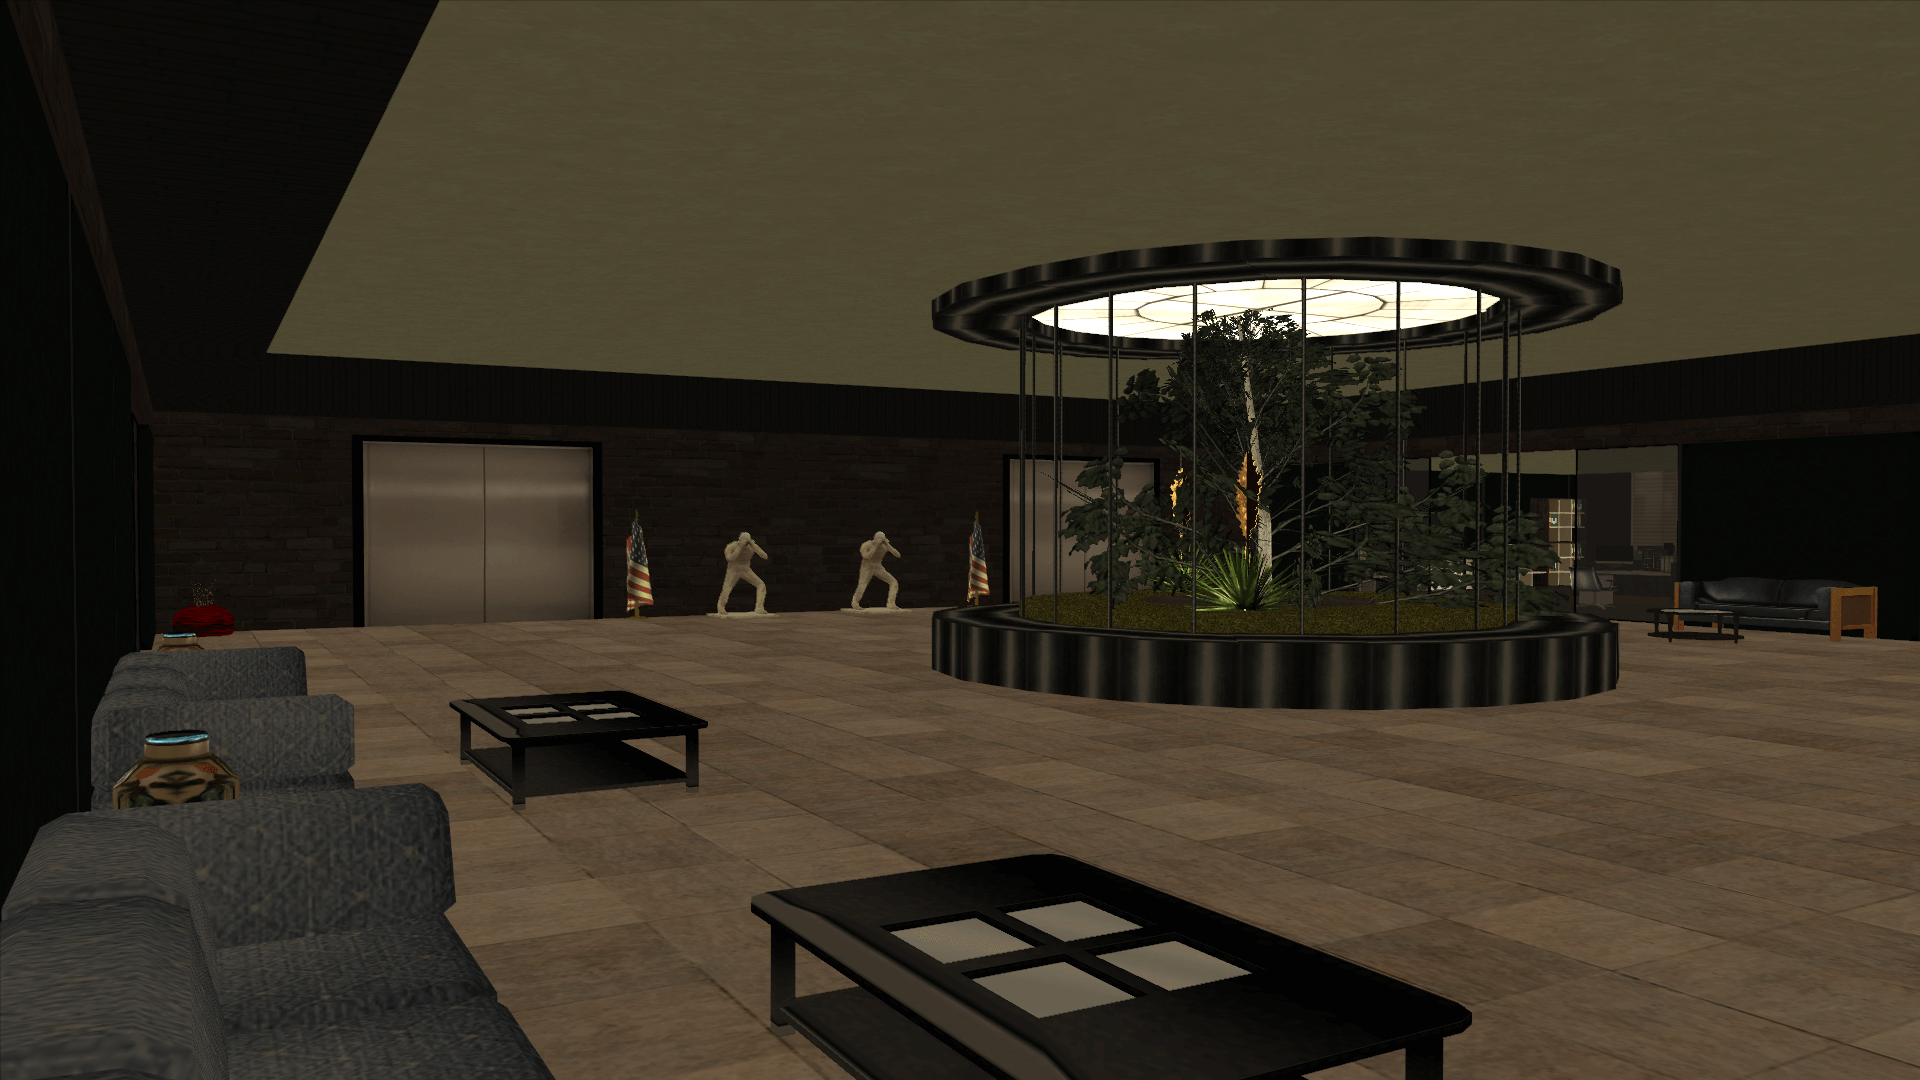 Beverly Design Interior and Exterior Services for SA:MP FBI Building